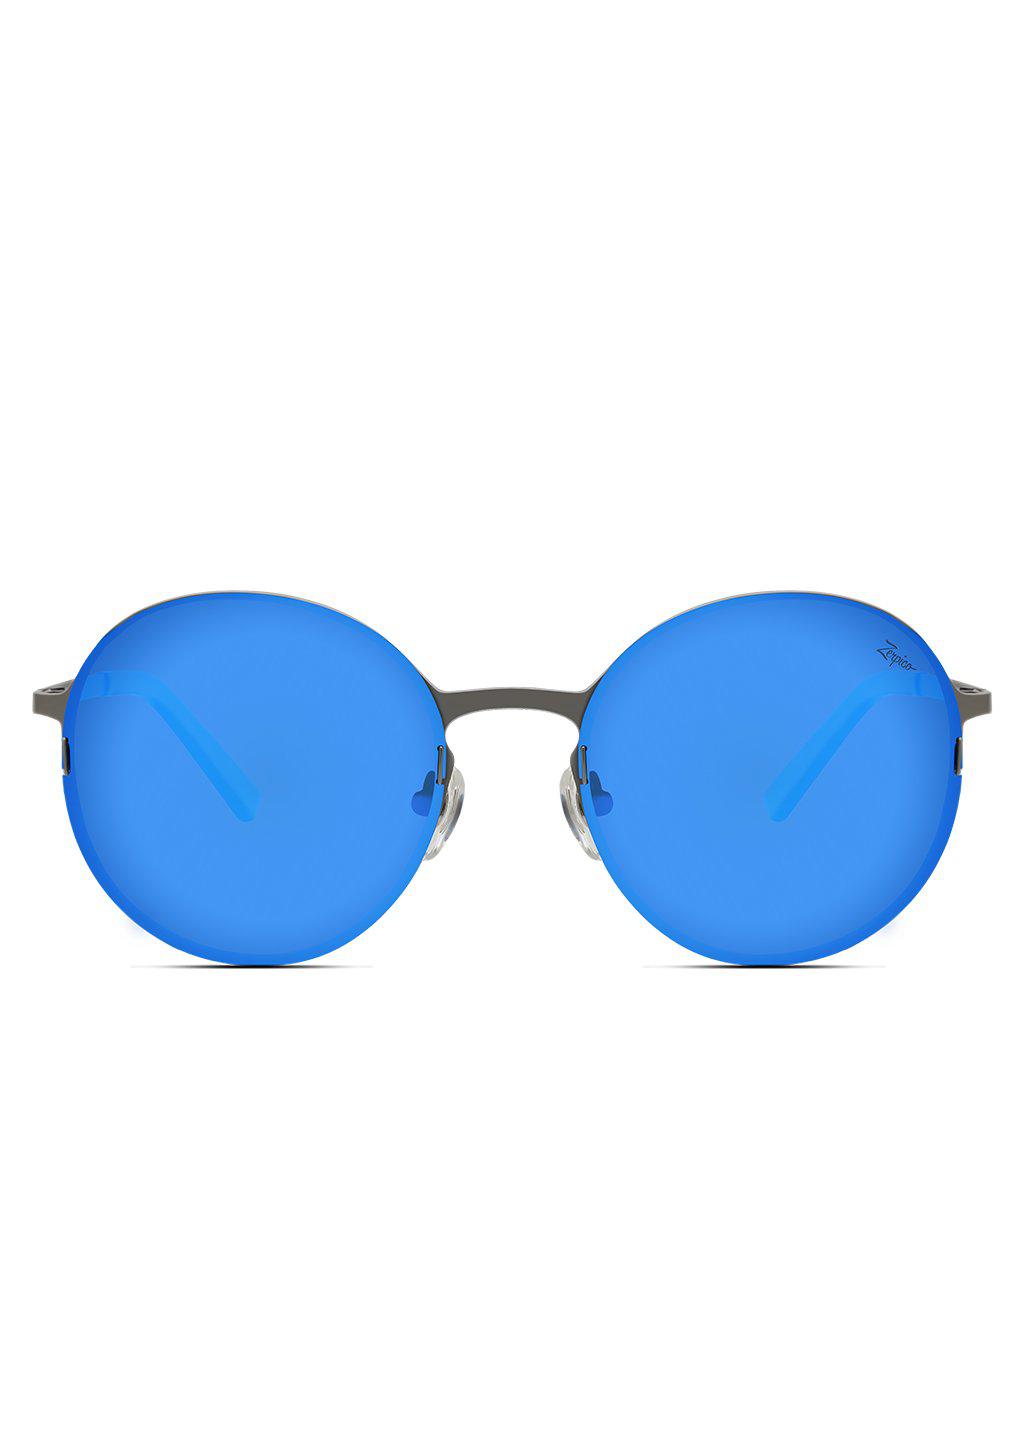 Titan - Titanium Round Sunglasses V2 - Front photo taken in studio of our gun metal version with blue lenses.